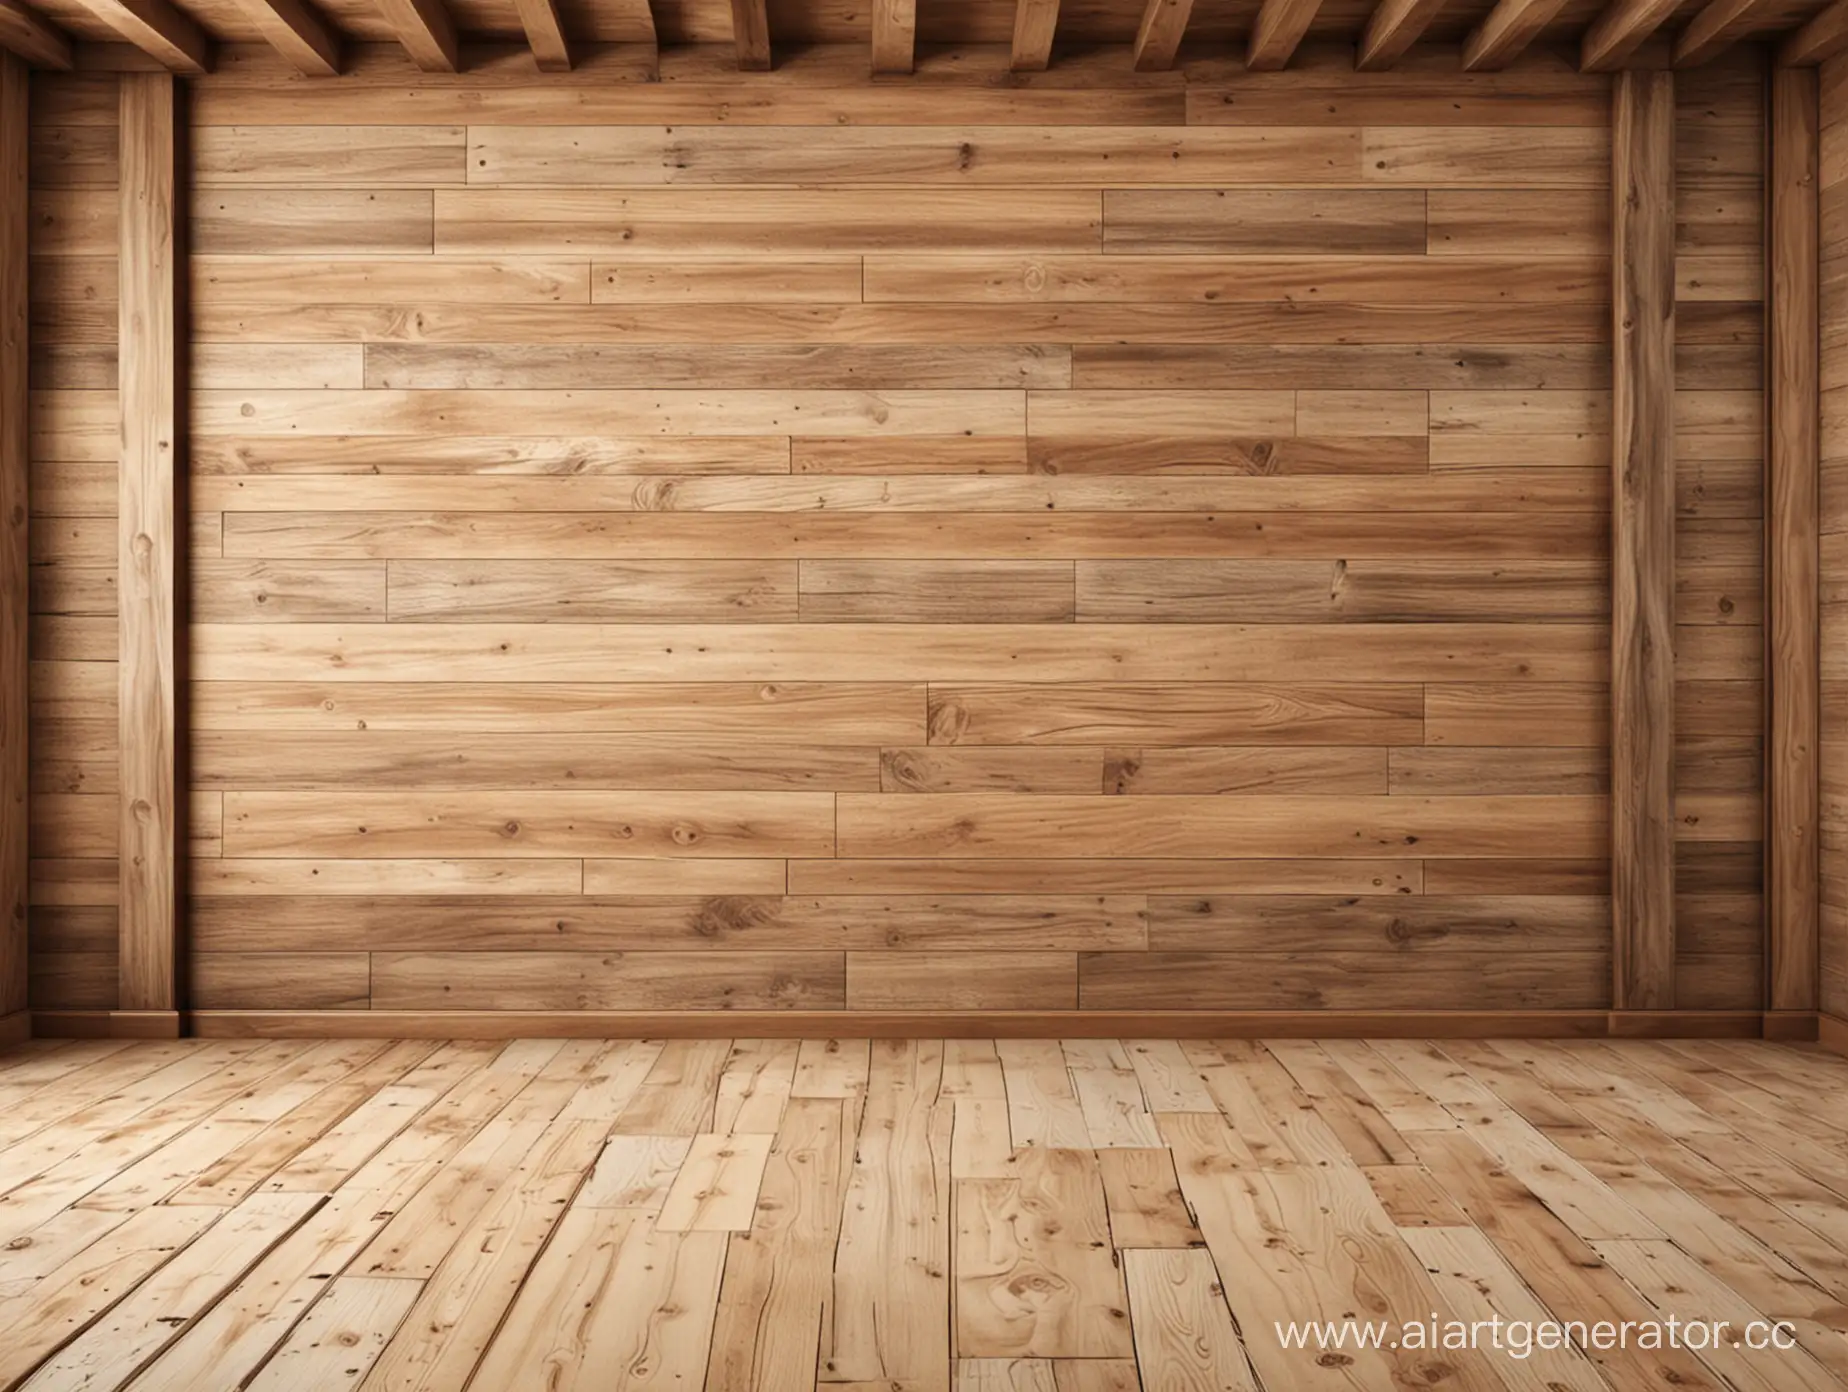 Empty-Wooden-Room-Background-Illustration